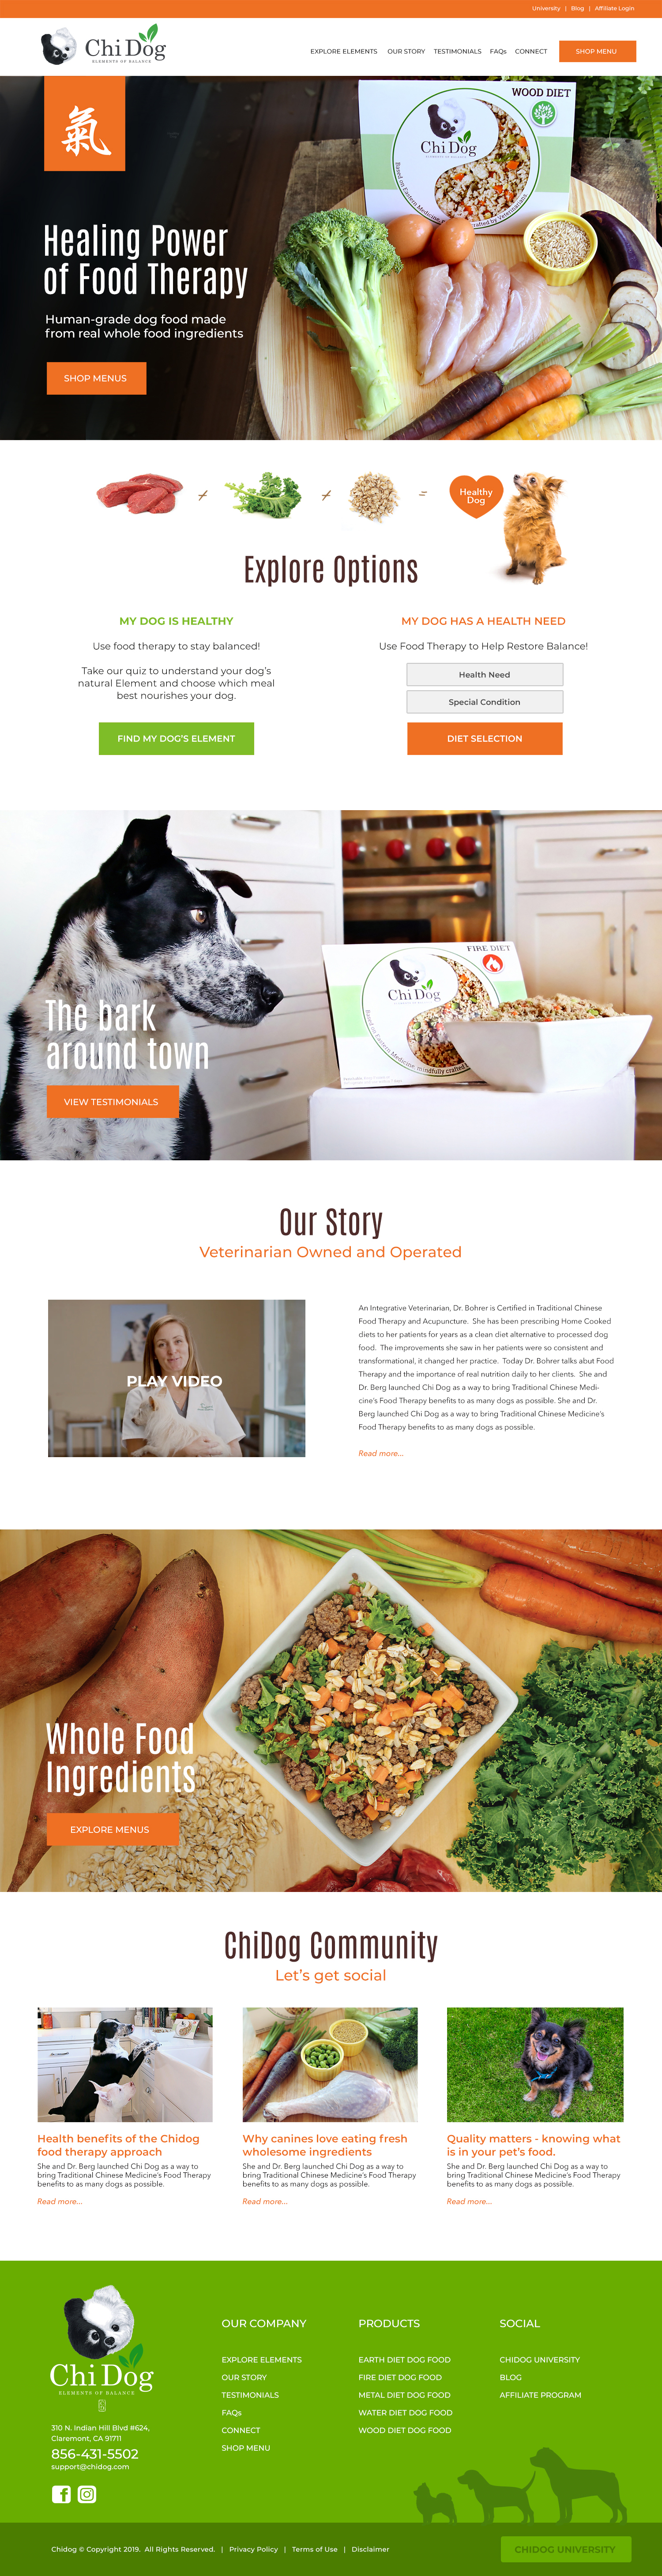 Orange County Brand Agency - Website Design - UI/UX Design